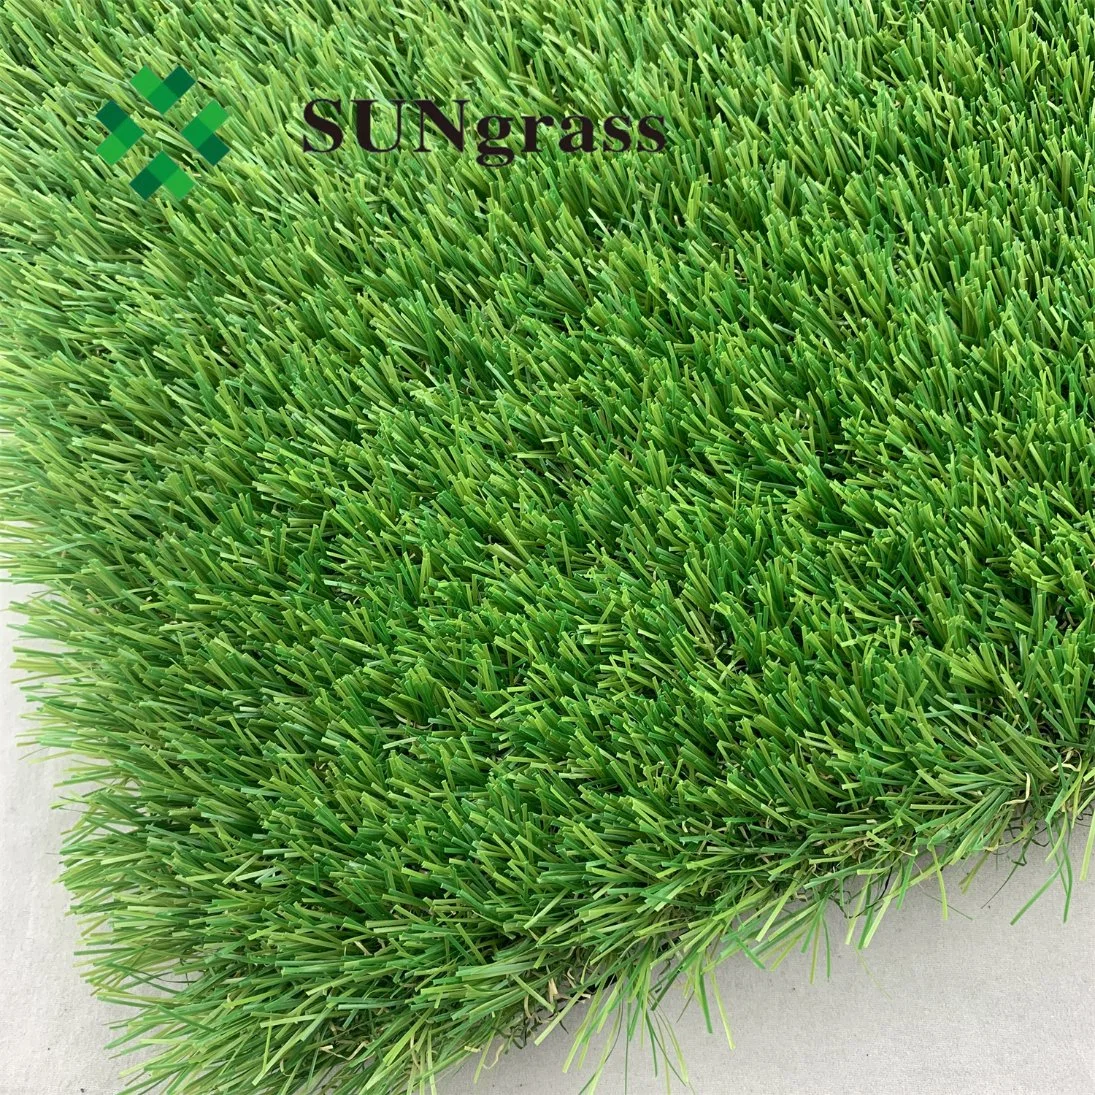 Best Selling Artificial Grass Synthetic Grass High Density Dense Grass Carpet for Landscape Garden Hotel Home Decor